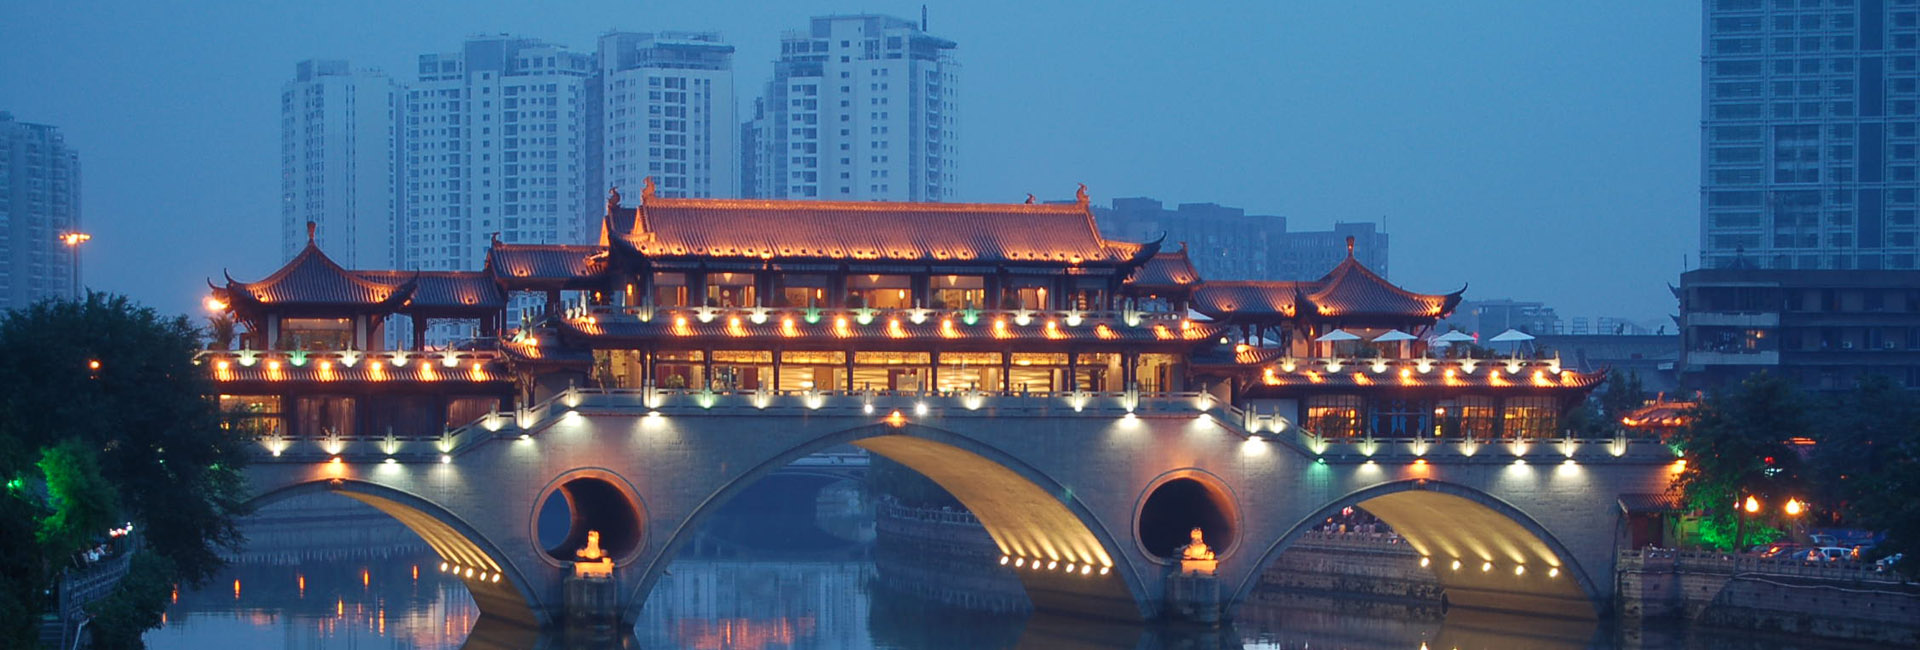 About Chengdu, China Destination Guide